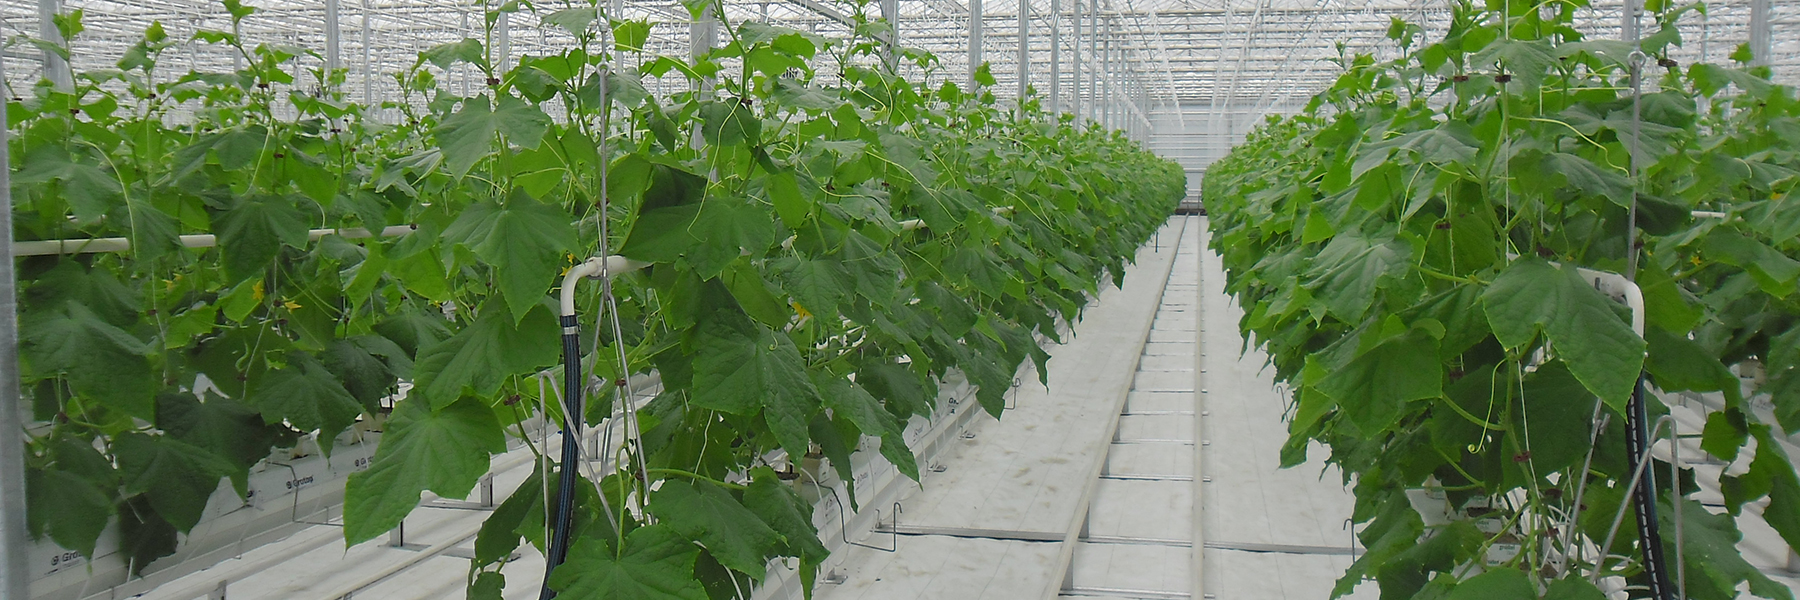 Venlo with hydroponics